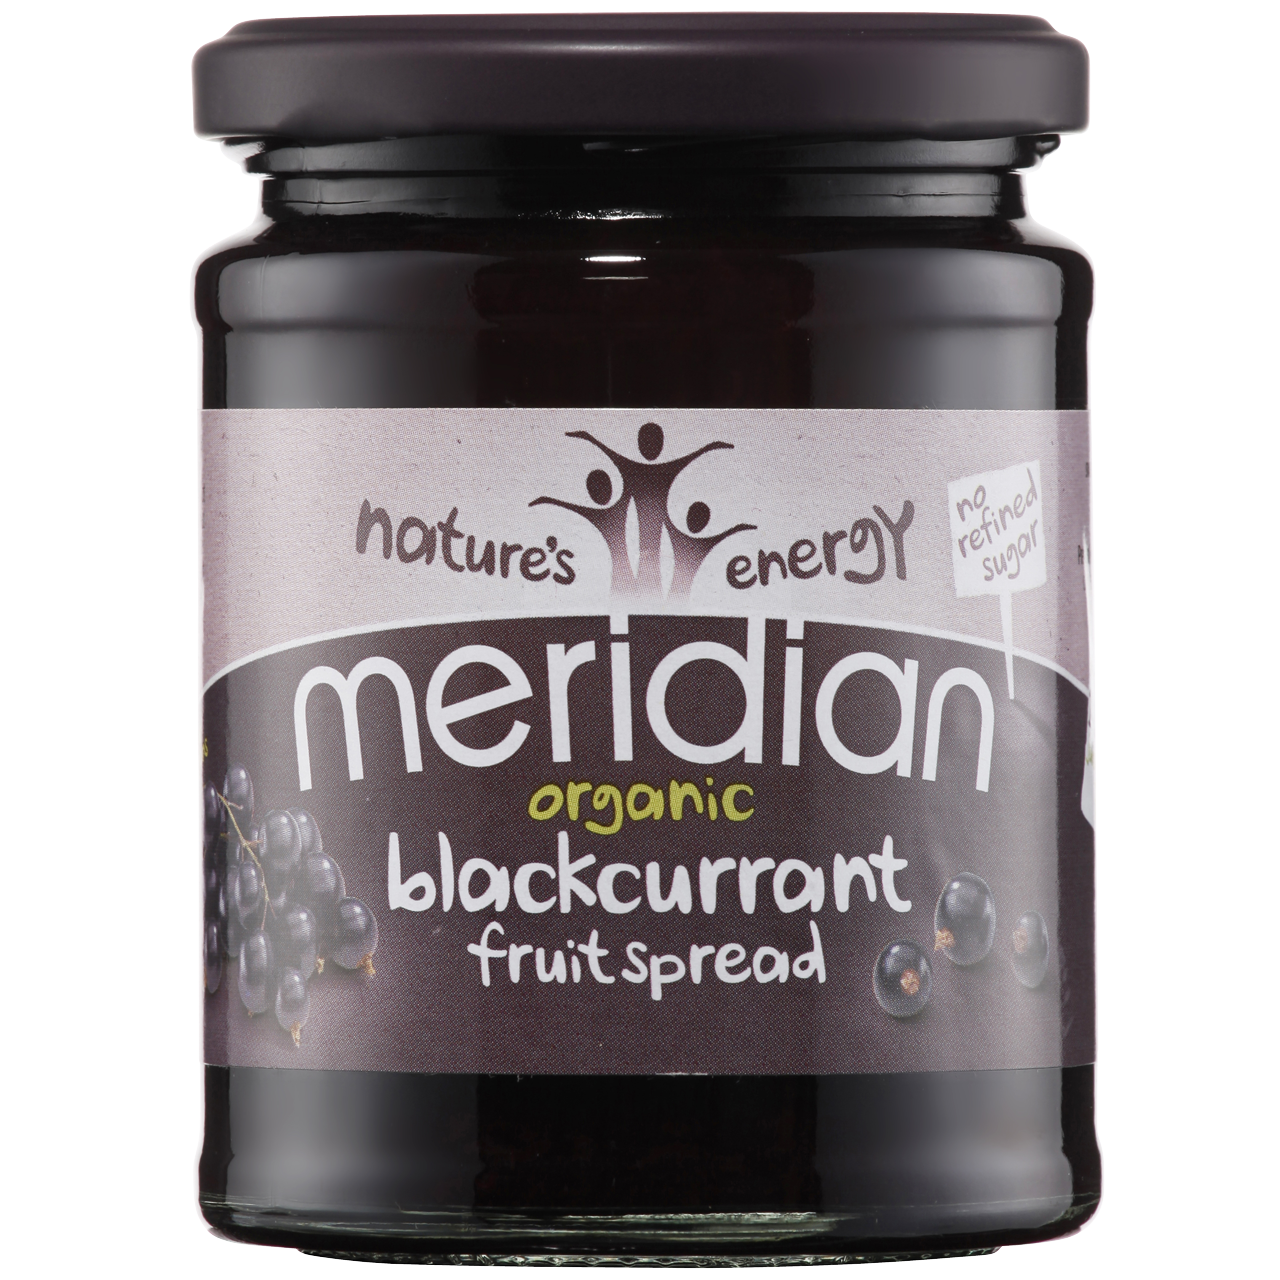 Meridian Organic Blackcurrant Fruit Spread 284g - Just Natural